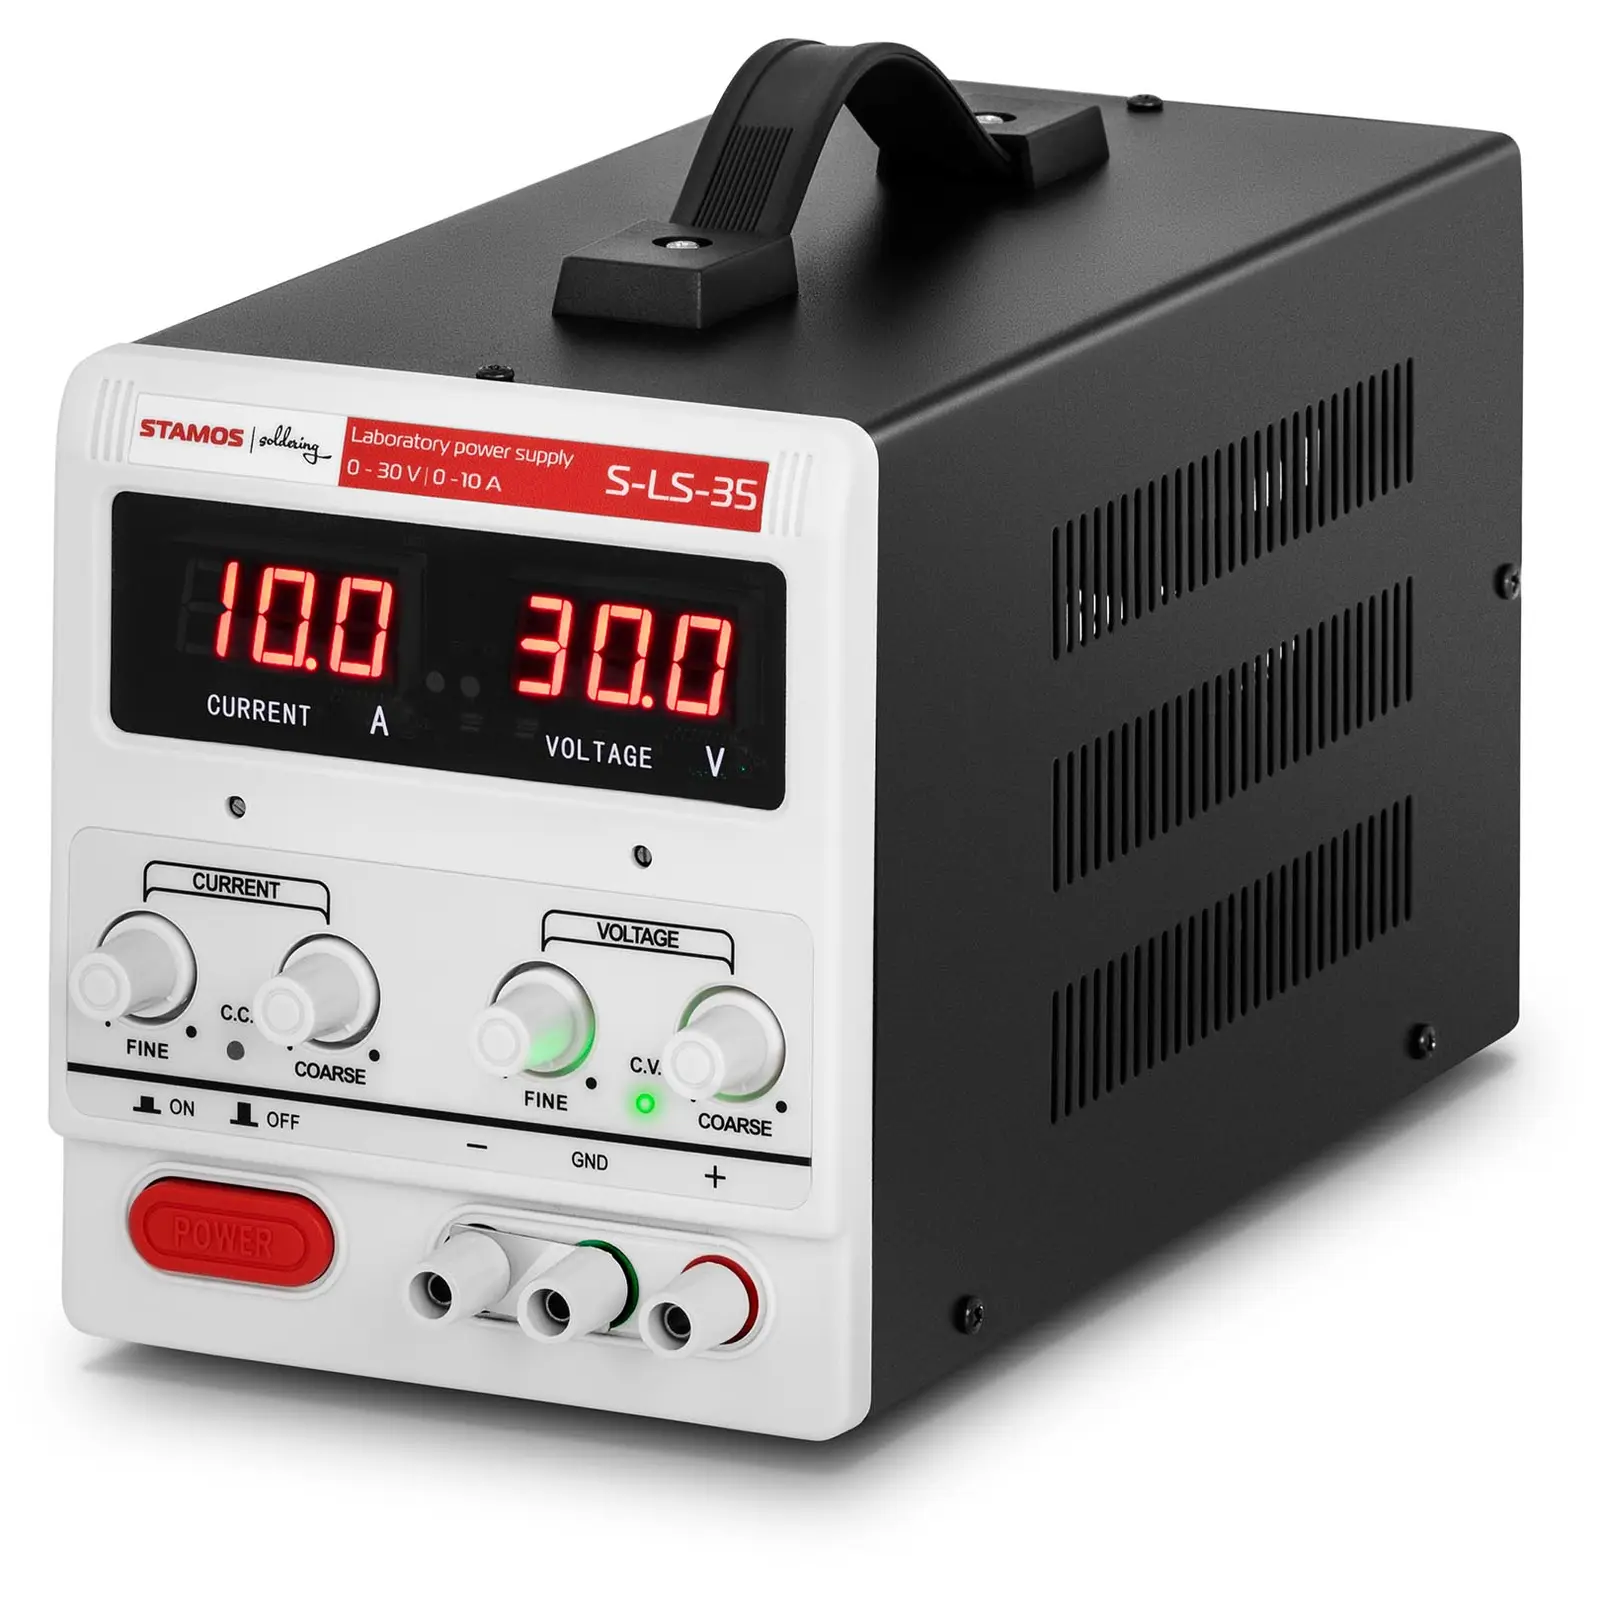 stamos soldering alimentation de laboratoire - 0-30 v - 0-10 a cc - 300 w